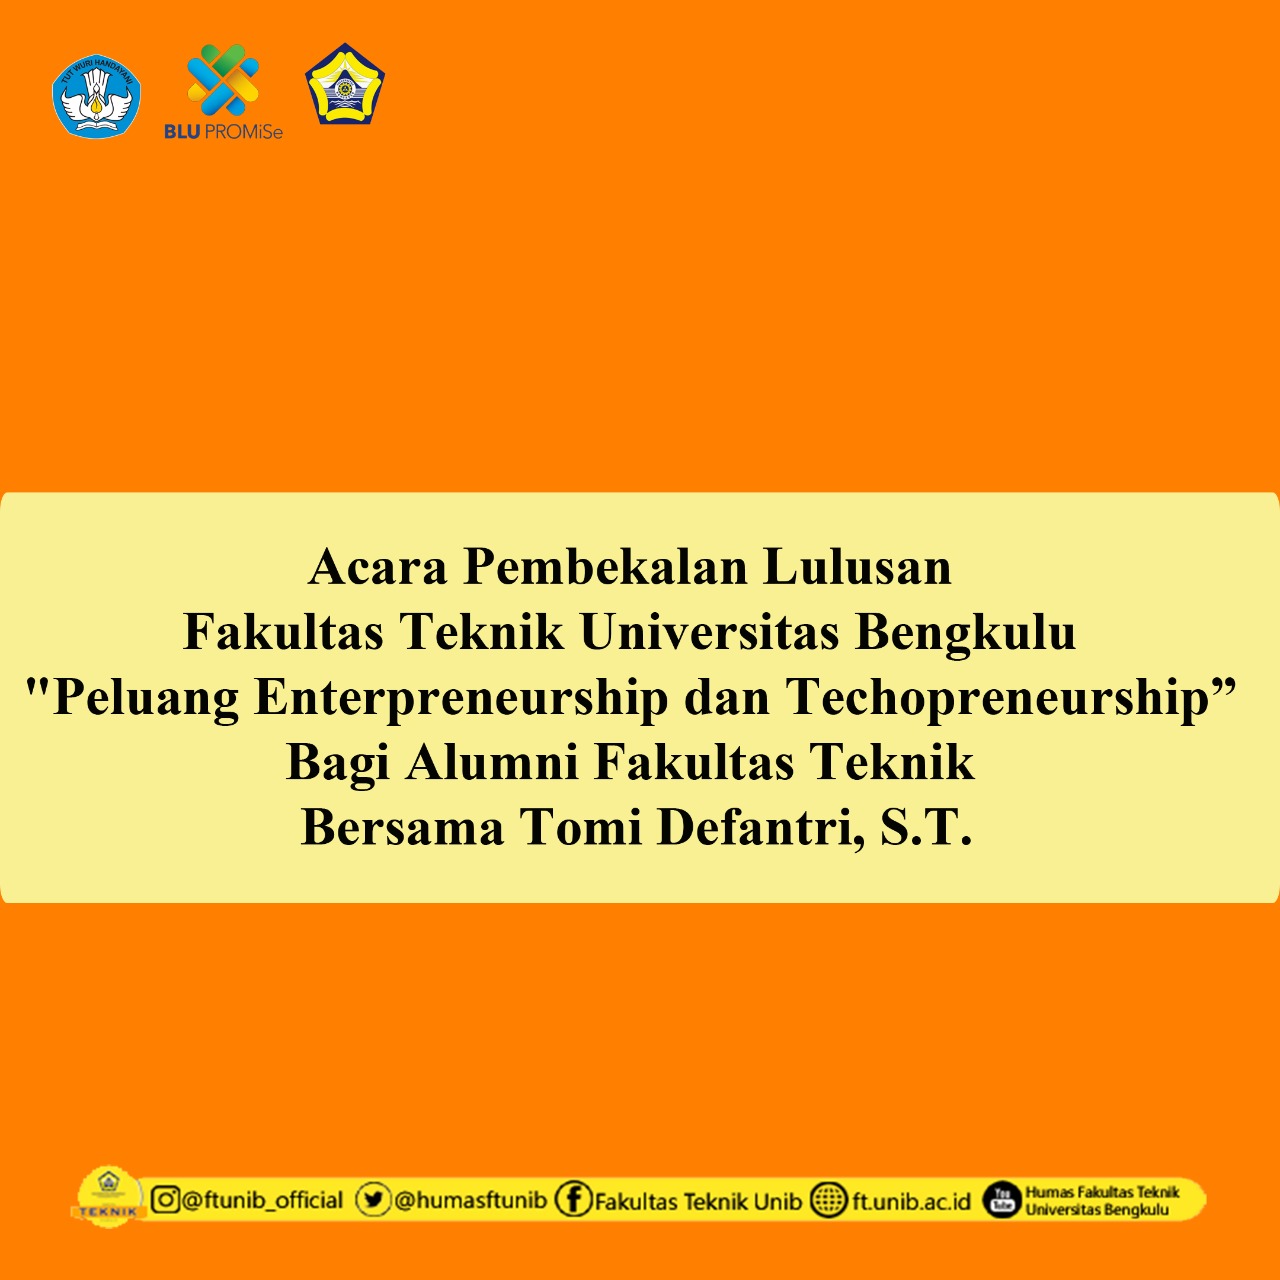 Fakultas Teknik UNIB, Menyelenggarakan kegiatan Acara Pembekalan Lulusan Fakultas Teknik Universitas Bengkulu